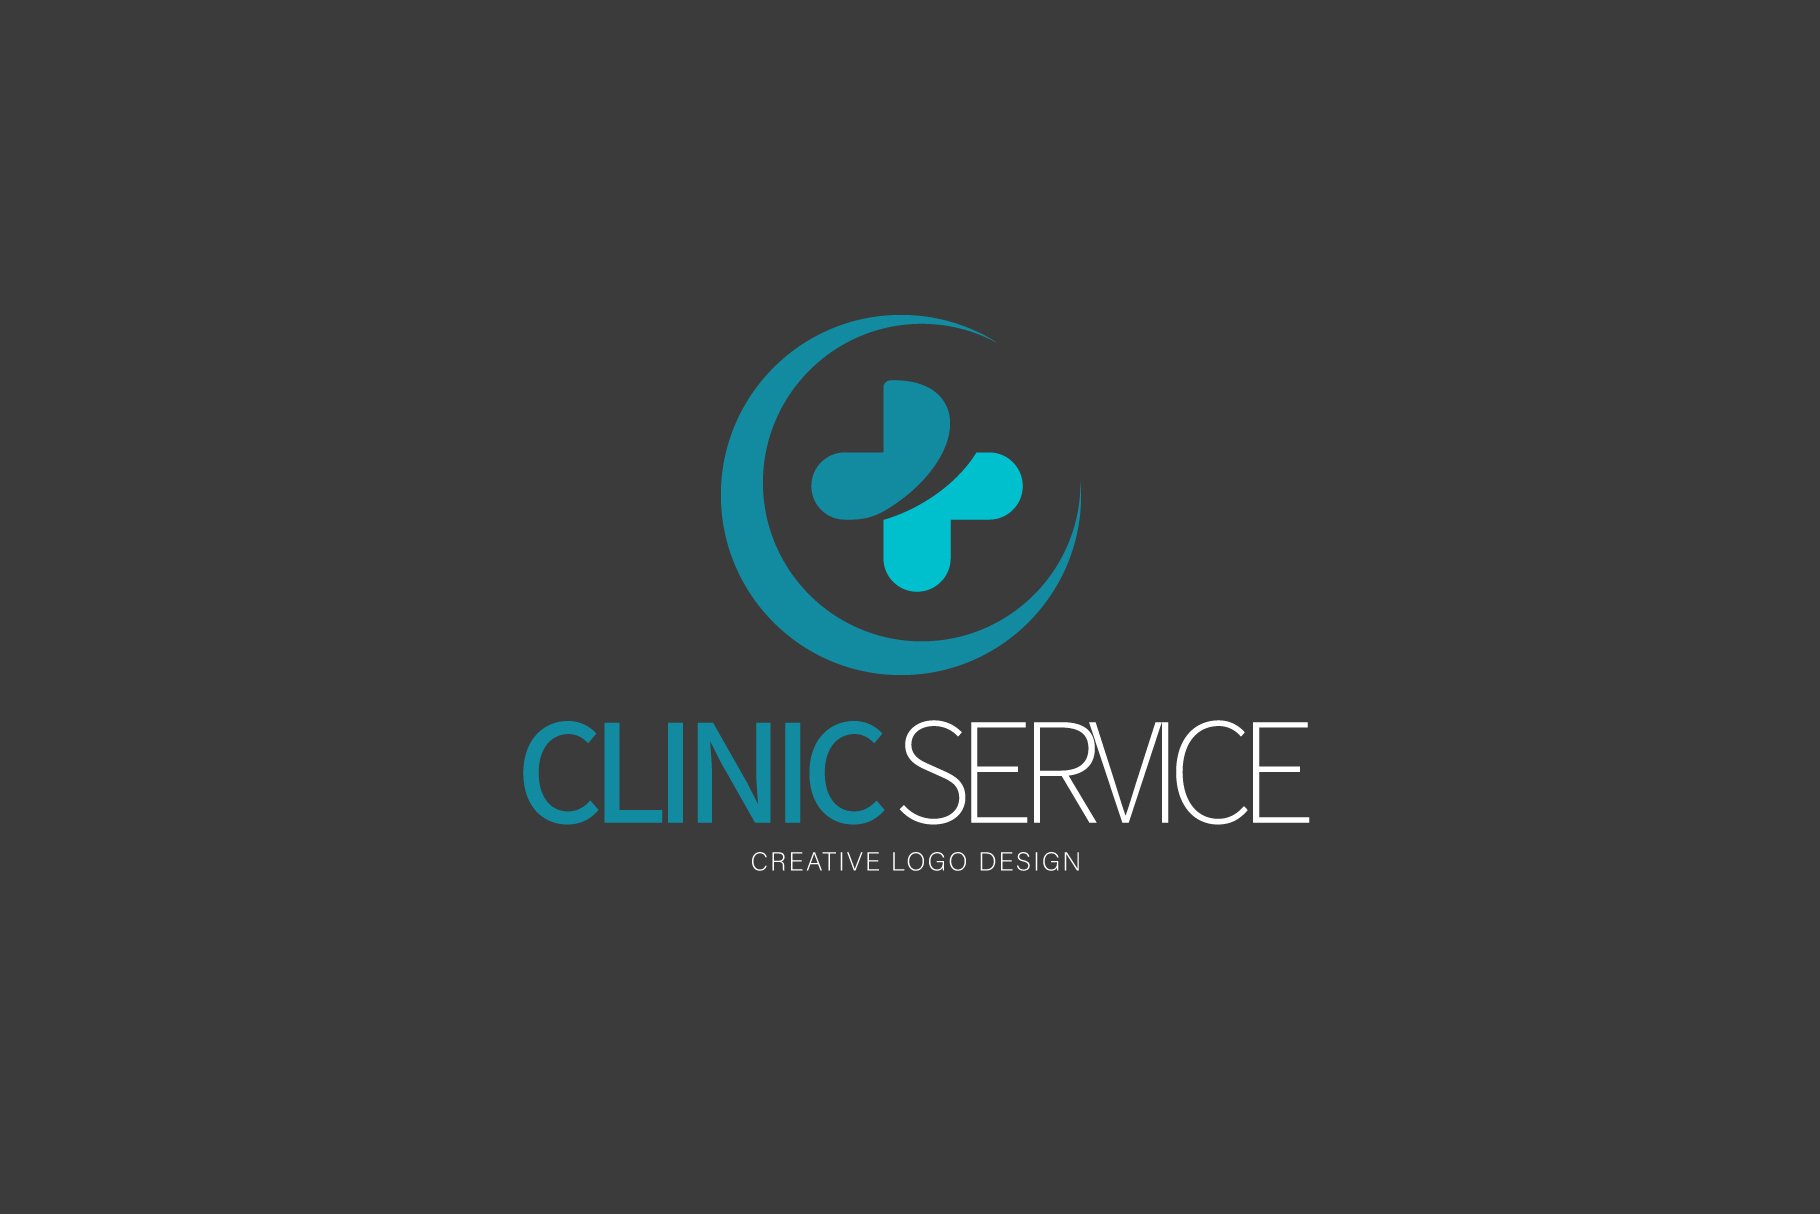 medic service logo preview image.